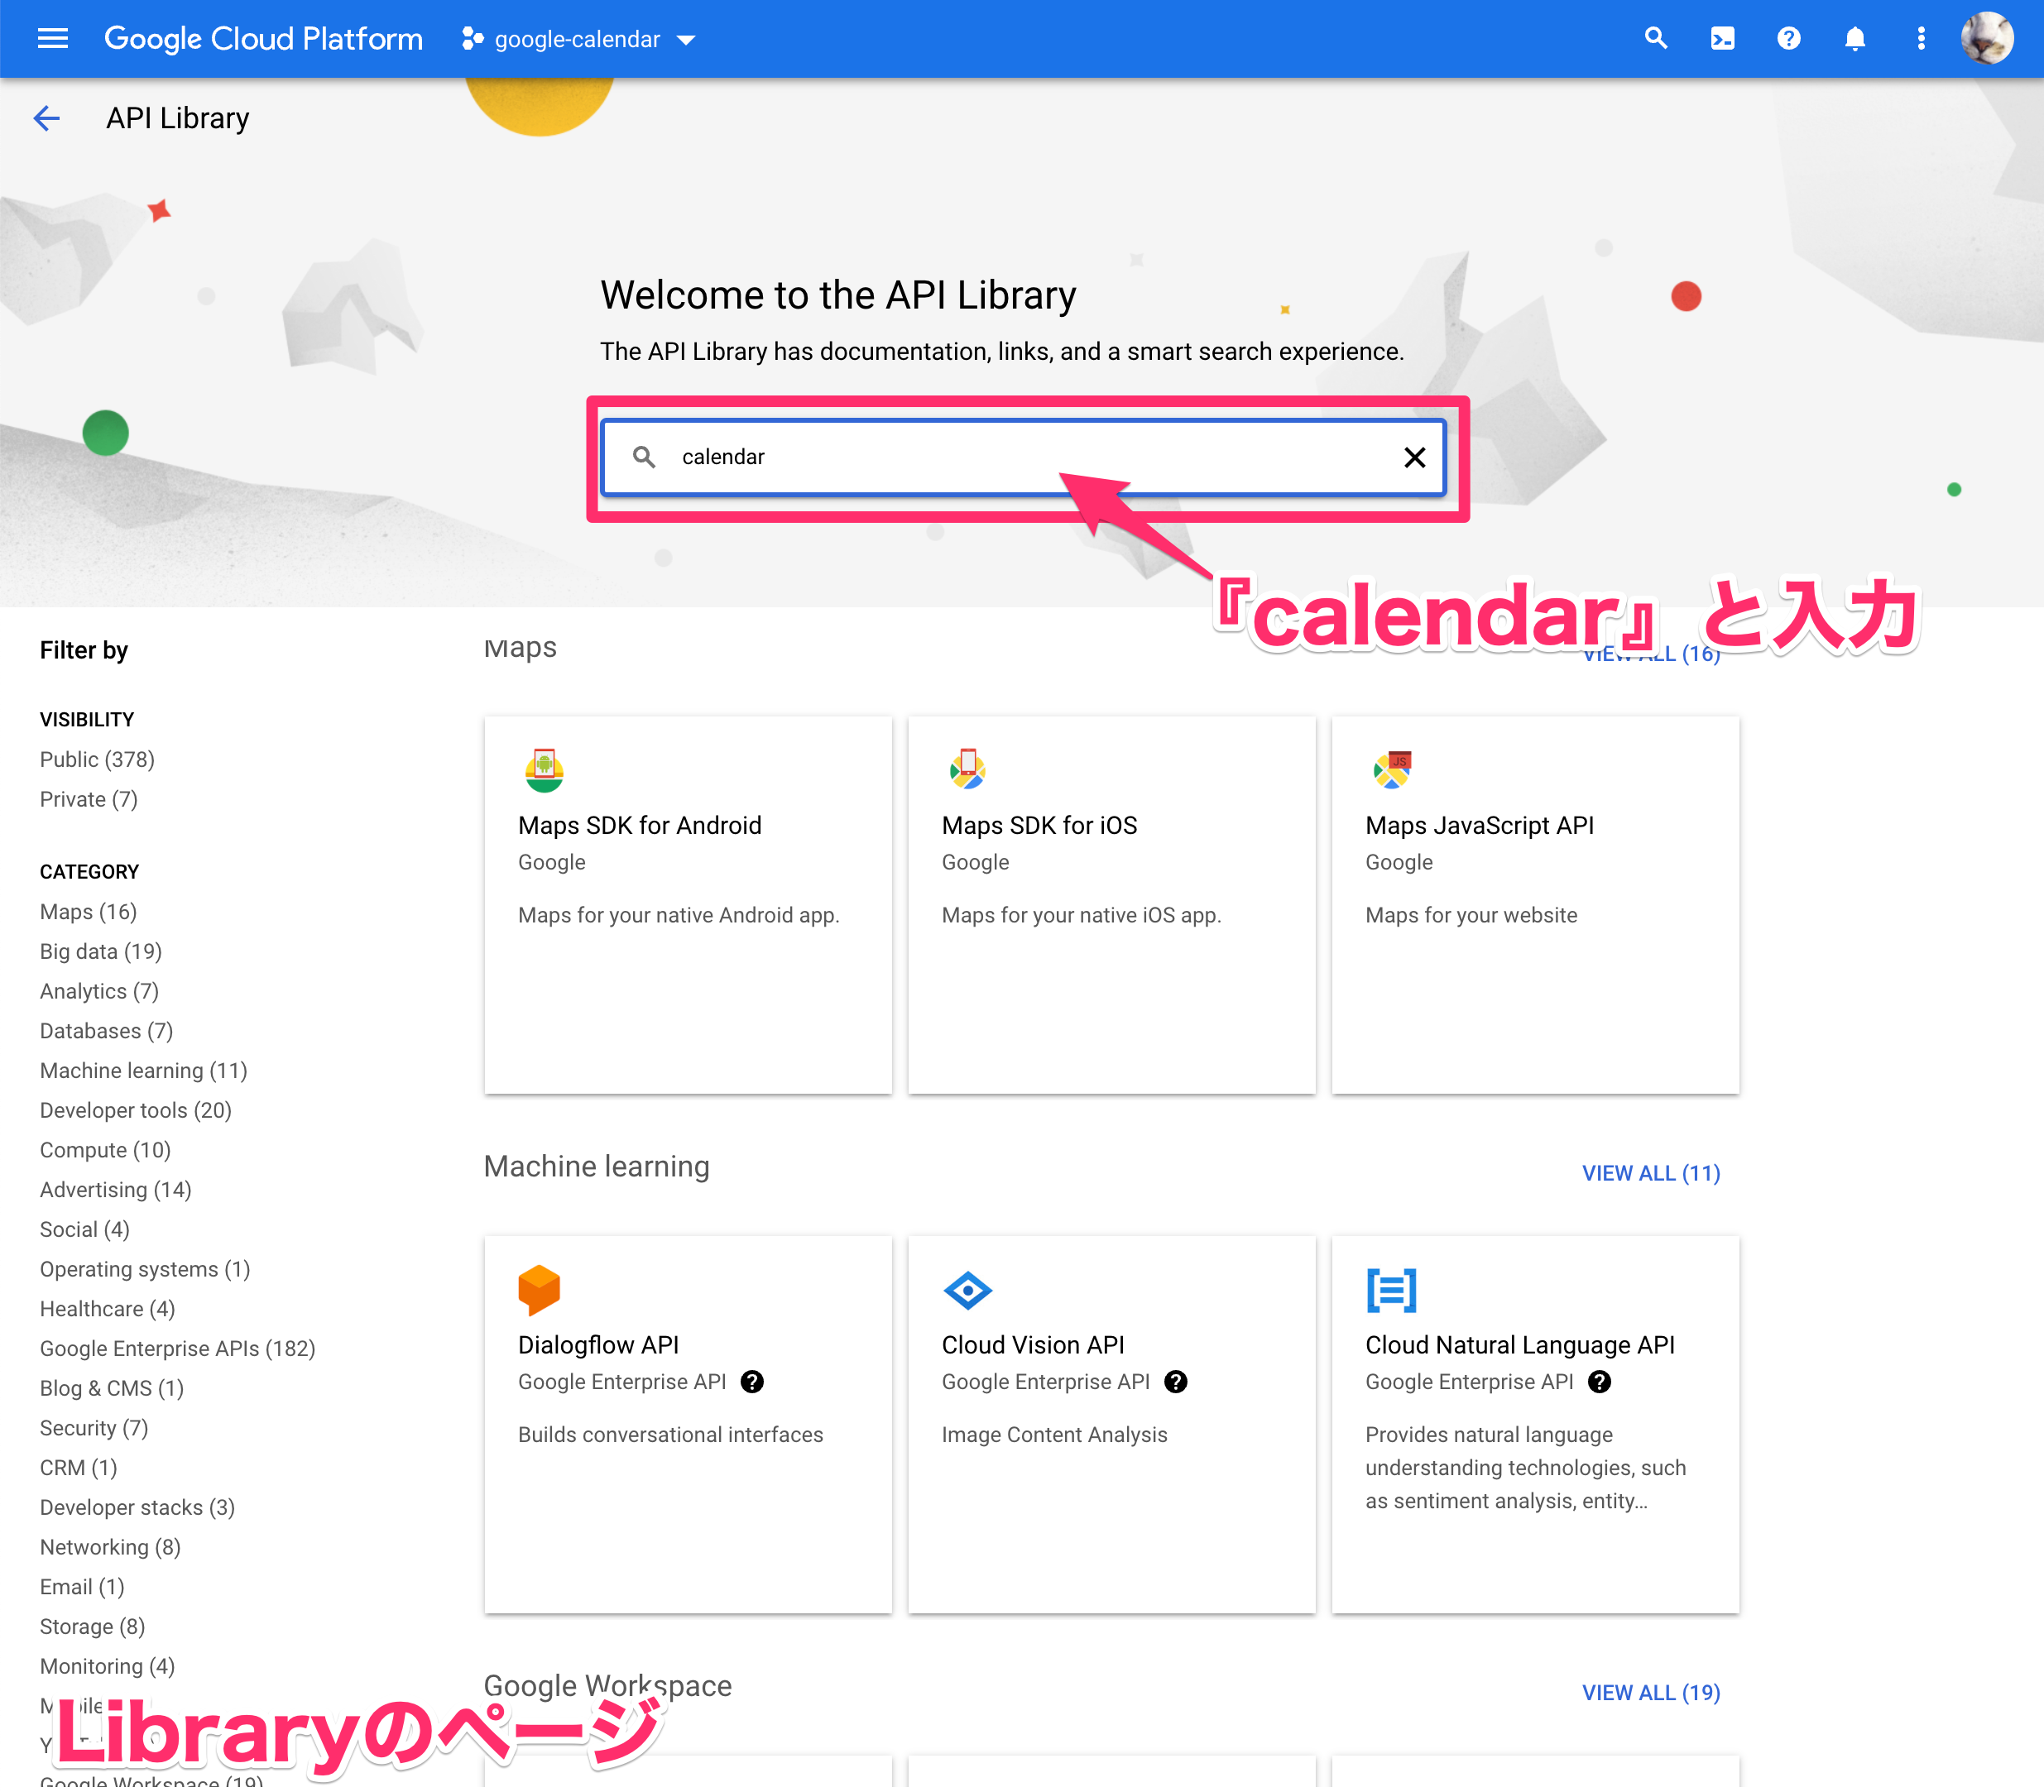 API Libraryの検索欄に『calendar』と入力